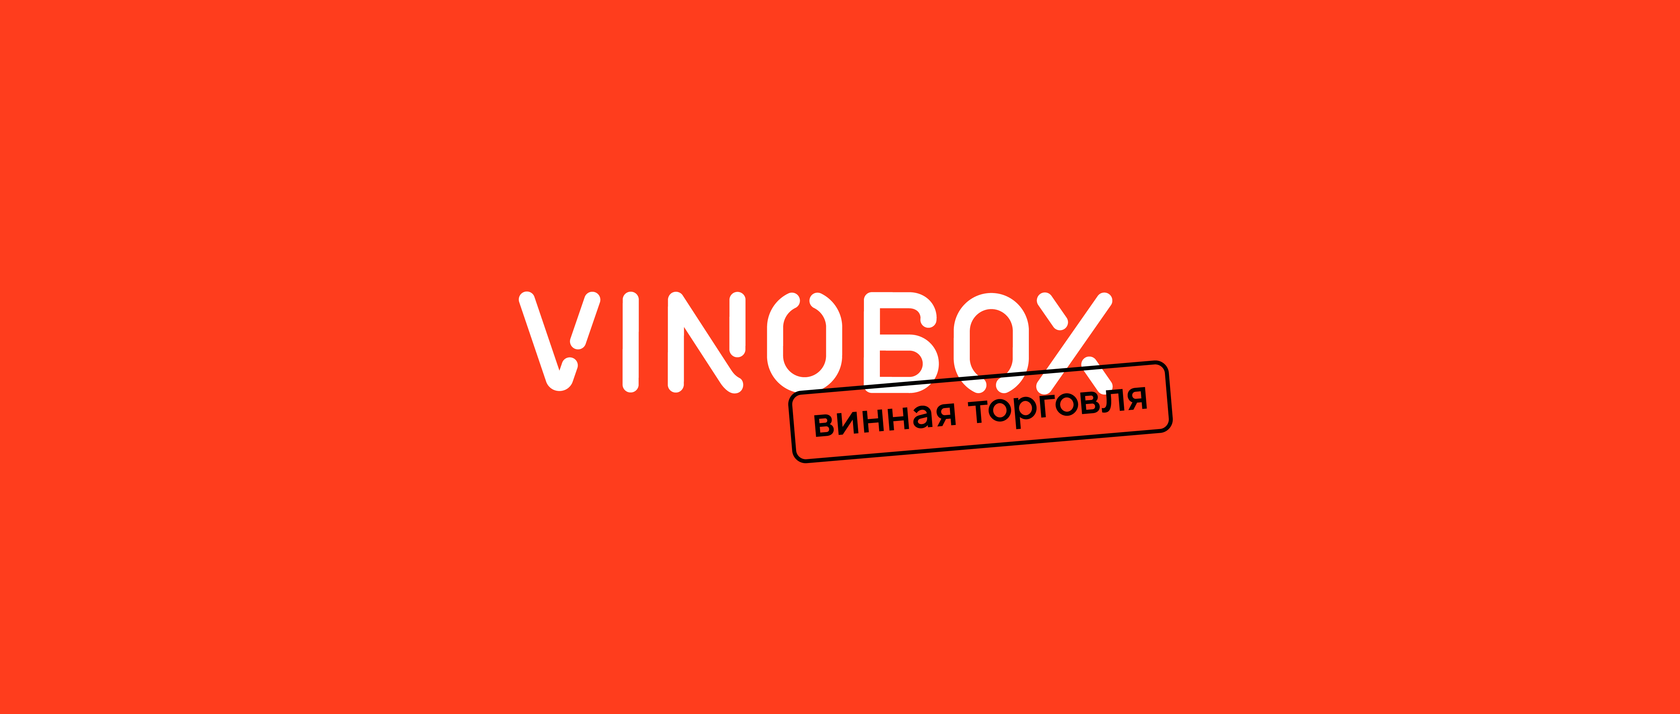 Логотип Vinobox